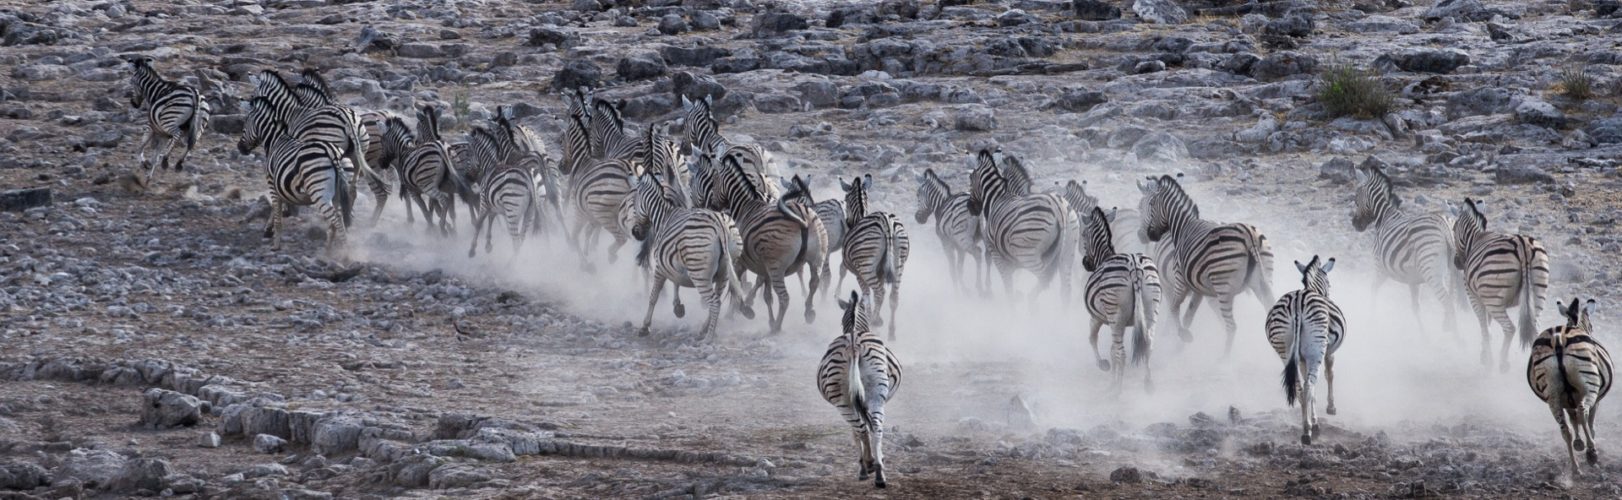 Namibia safari Etosha National Park Zebra herds on the run